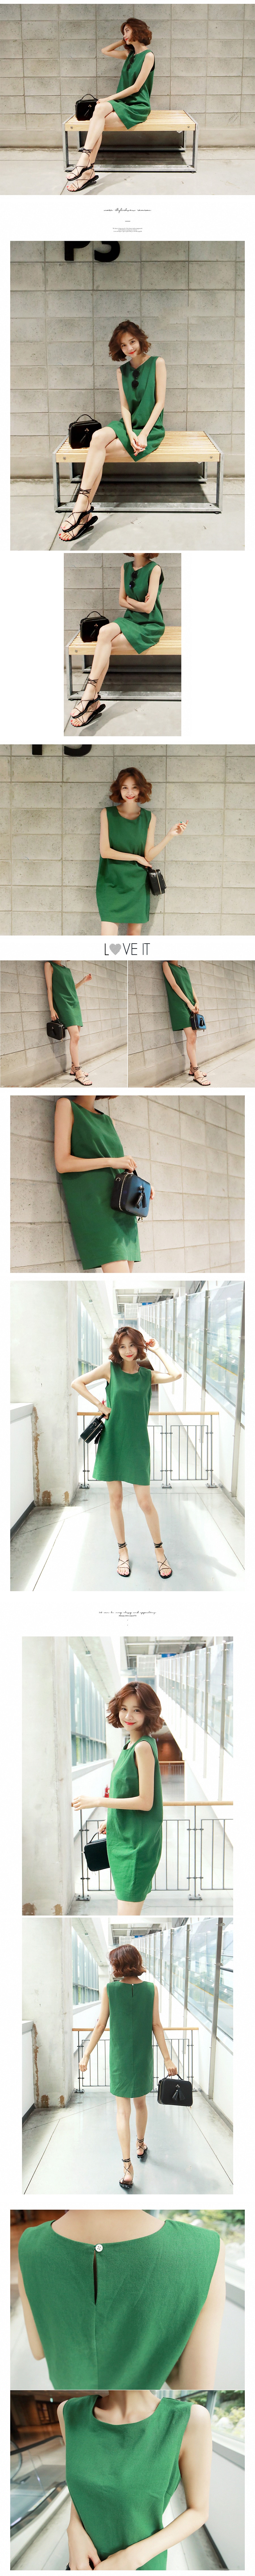 [KOREA] Sleeveless Linen Dress #Green One Size(S-M) [Free Shipping]